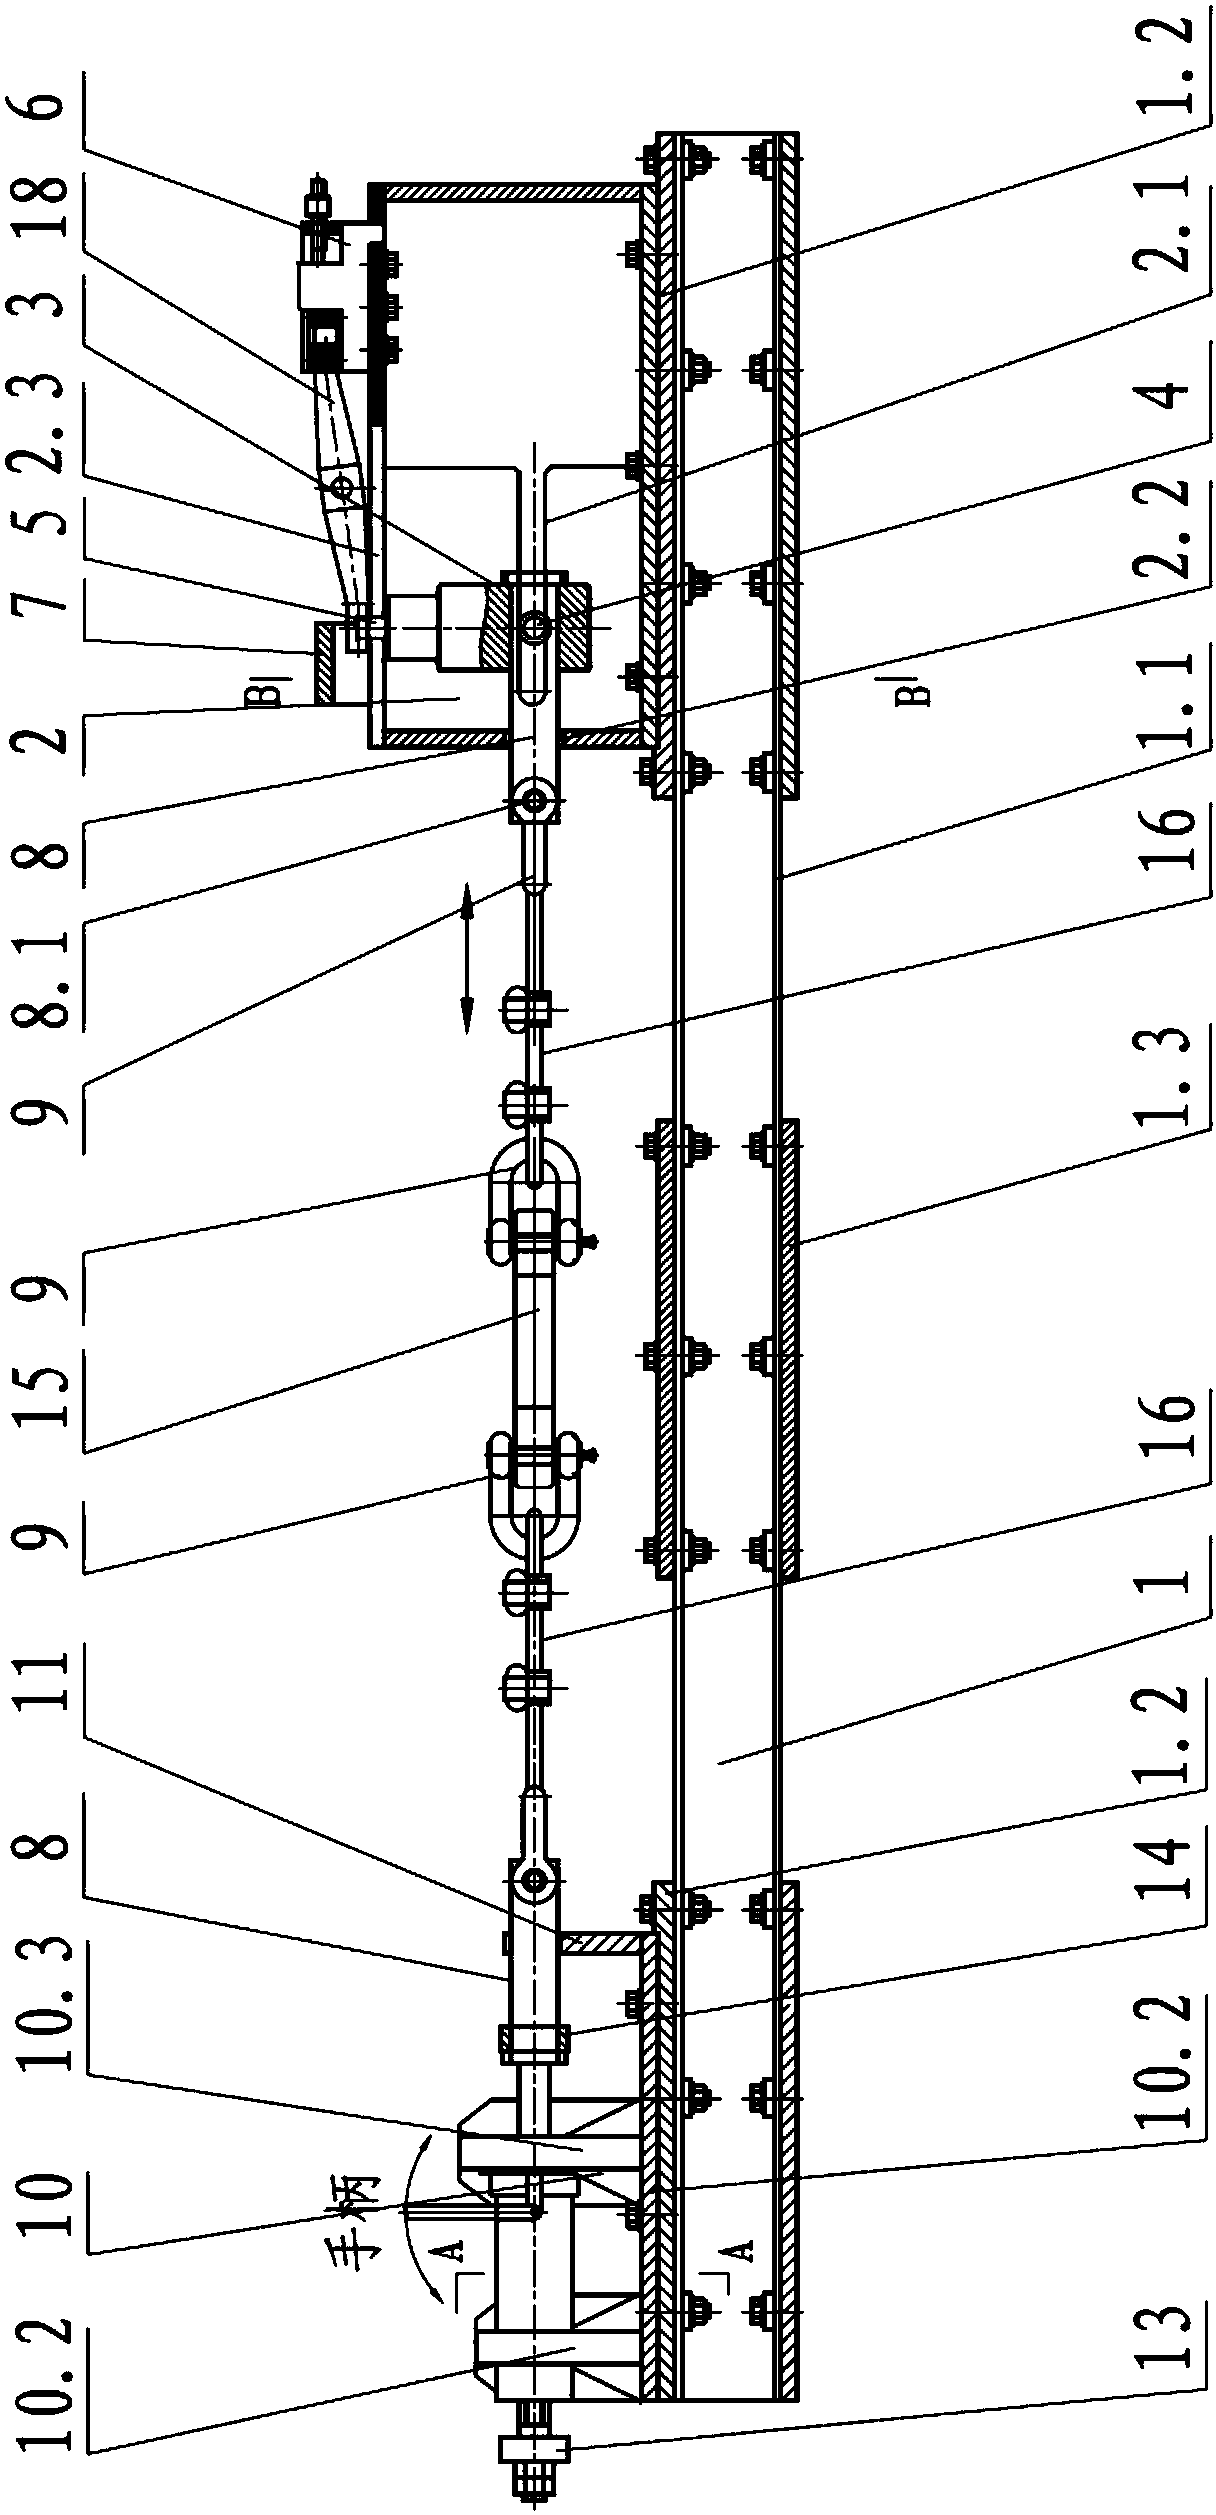 A locking mechanism analog force measuring device